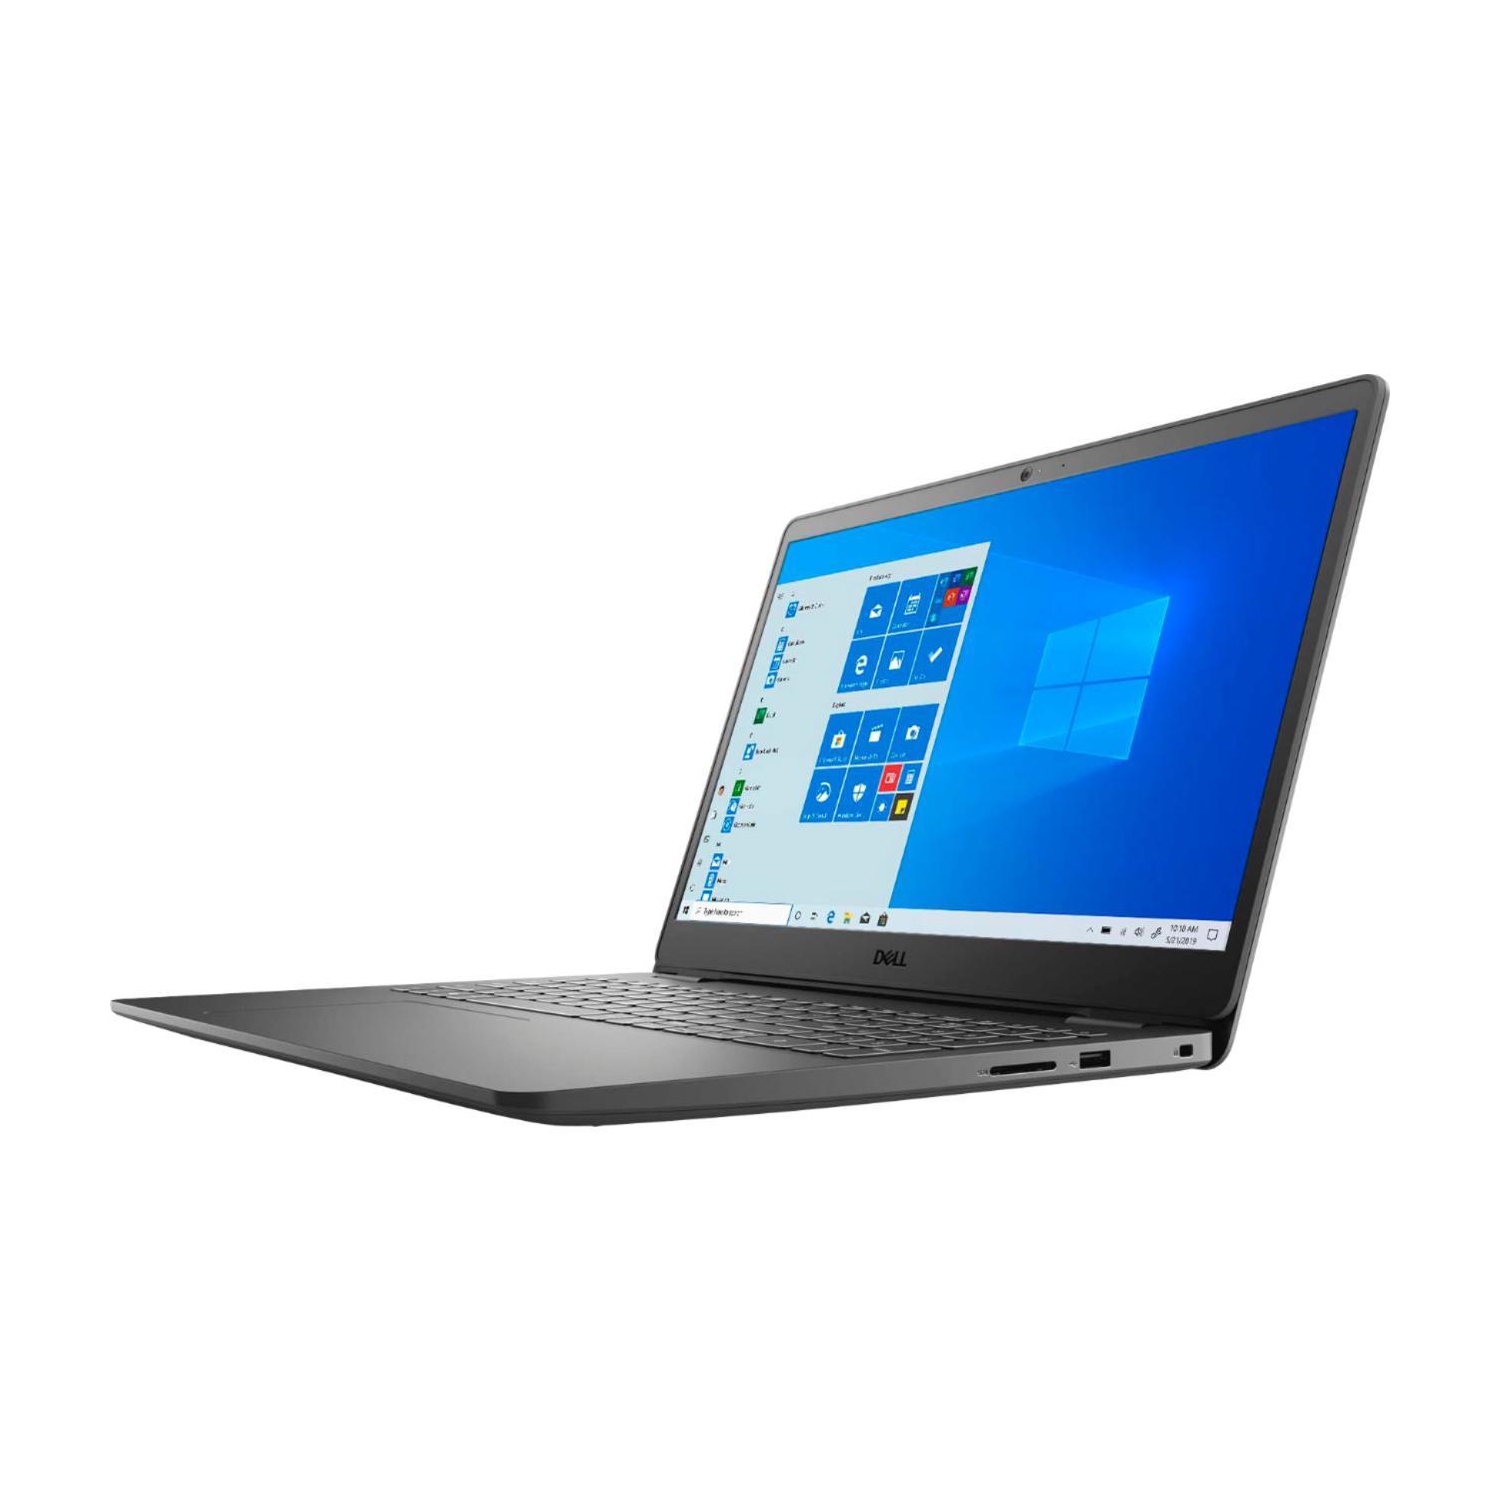 Dell Inspiron 15.6" Touch Screen Laptop (AMD Ryzen 5, 8GB RAM, 256GB SSD, Windows 10 S Mode) - Black (i3505-A542BLK-PUS) - Damage Retail Box